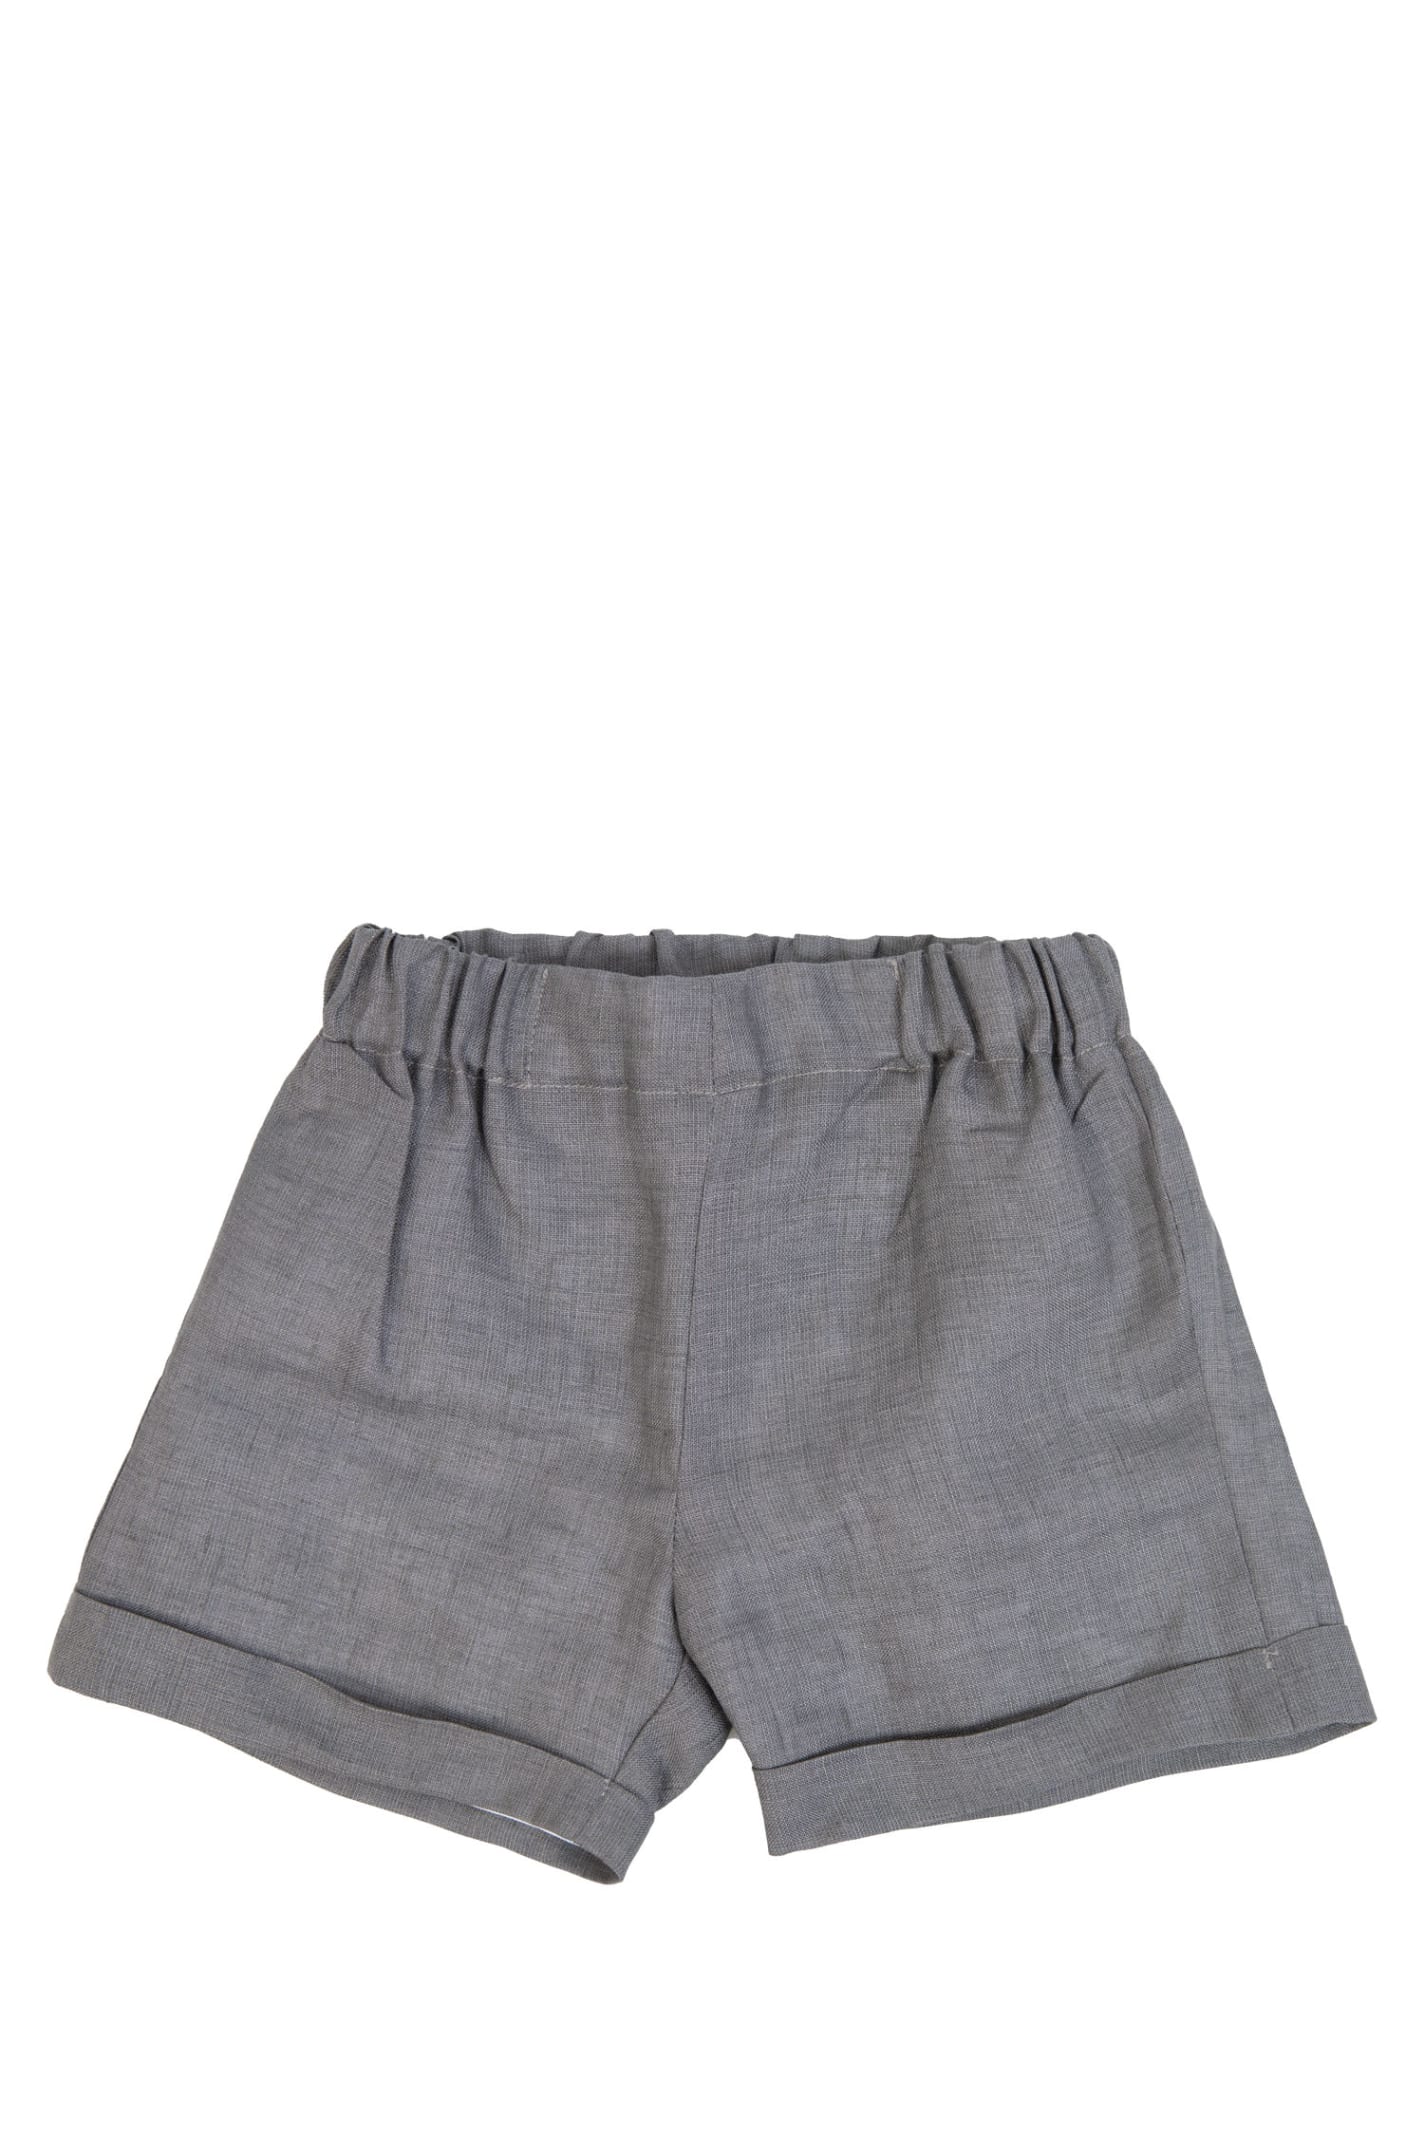 La Stupenderia Babies' Linen Shorts In Grey